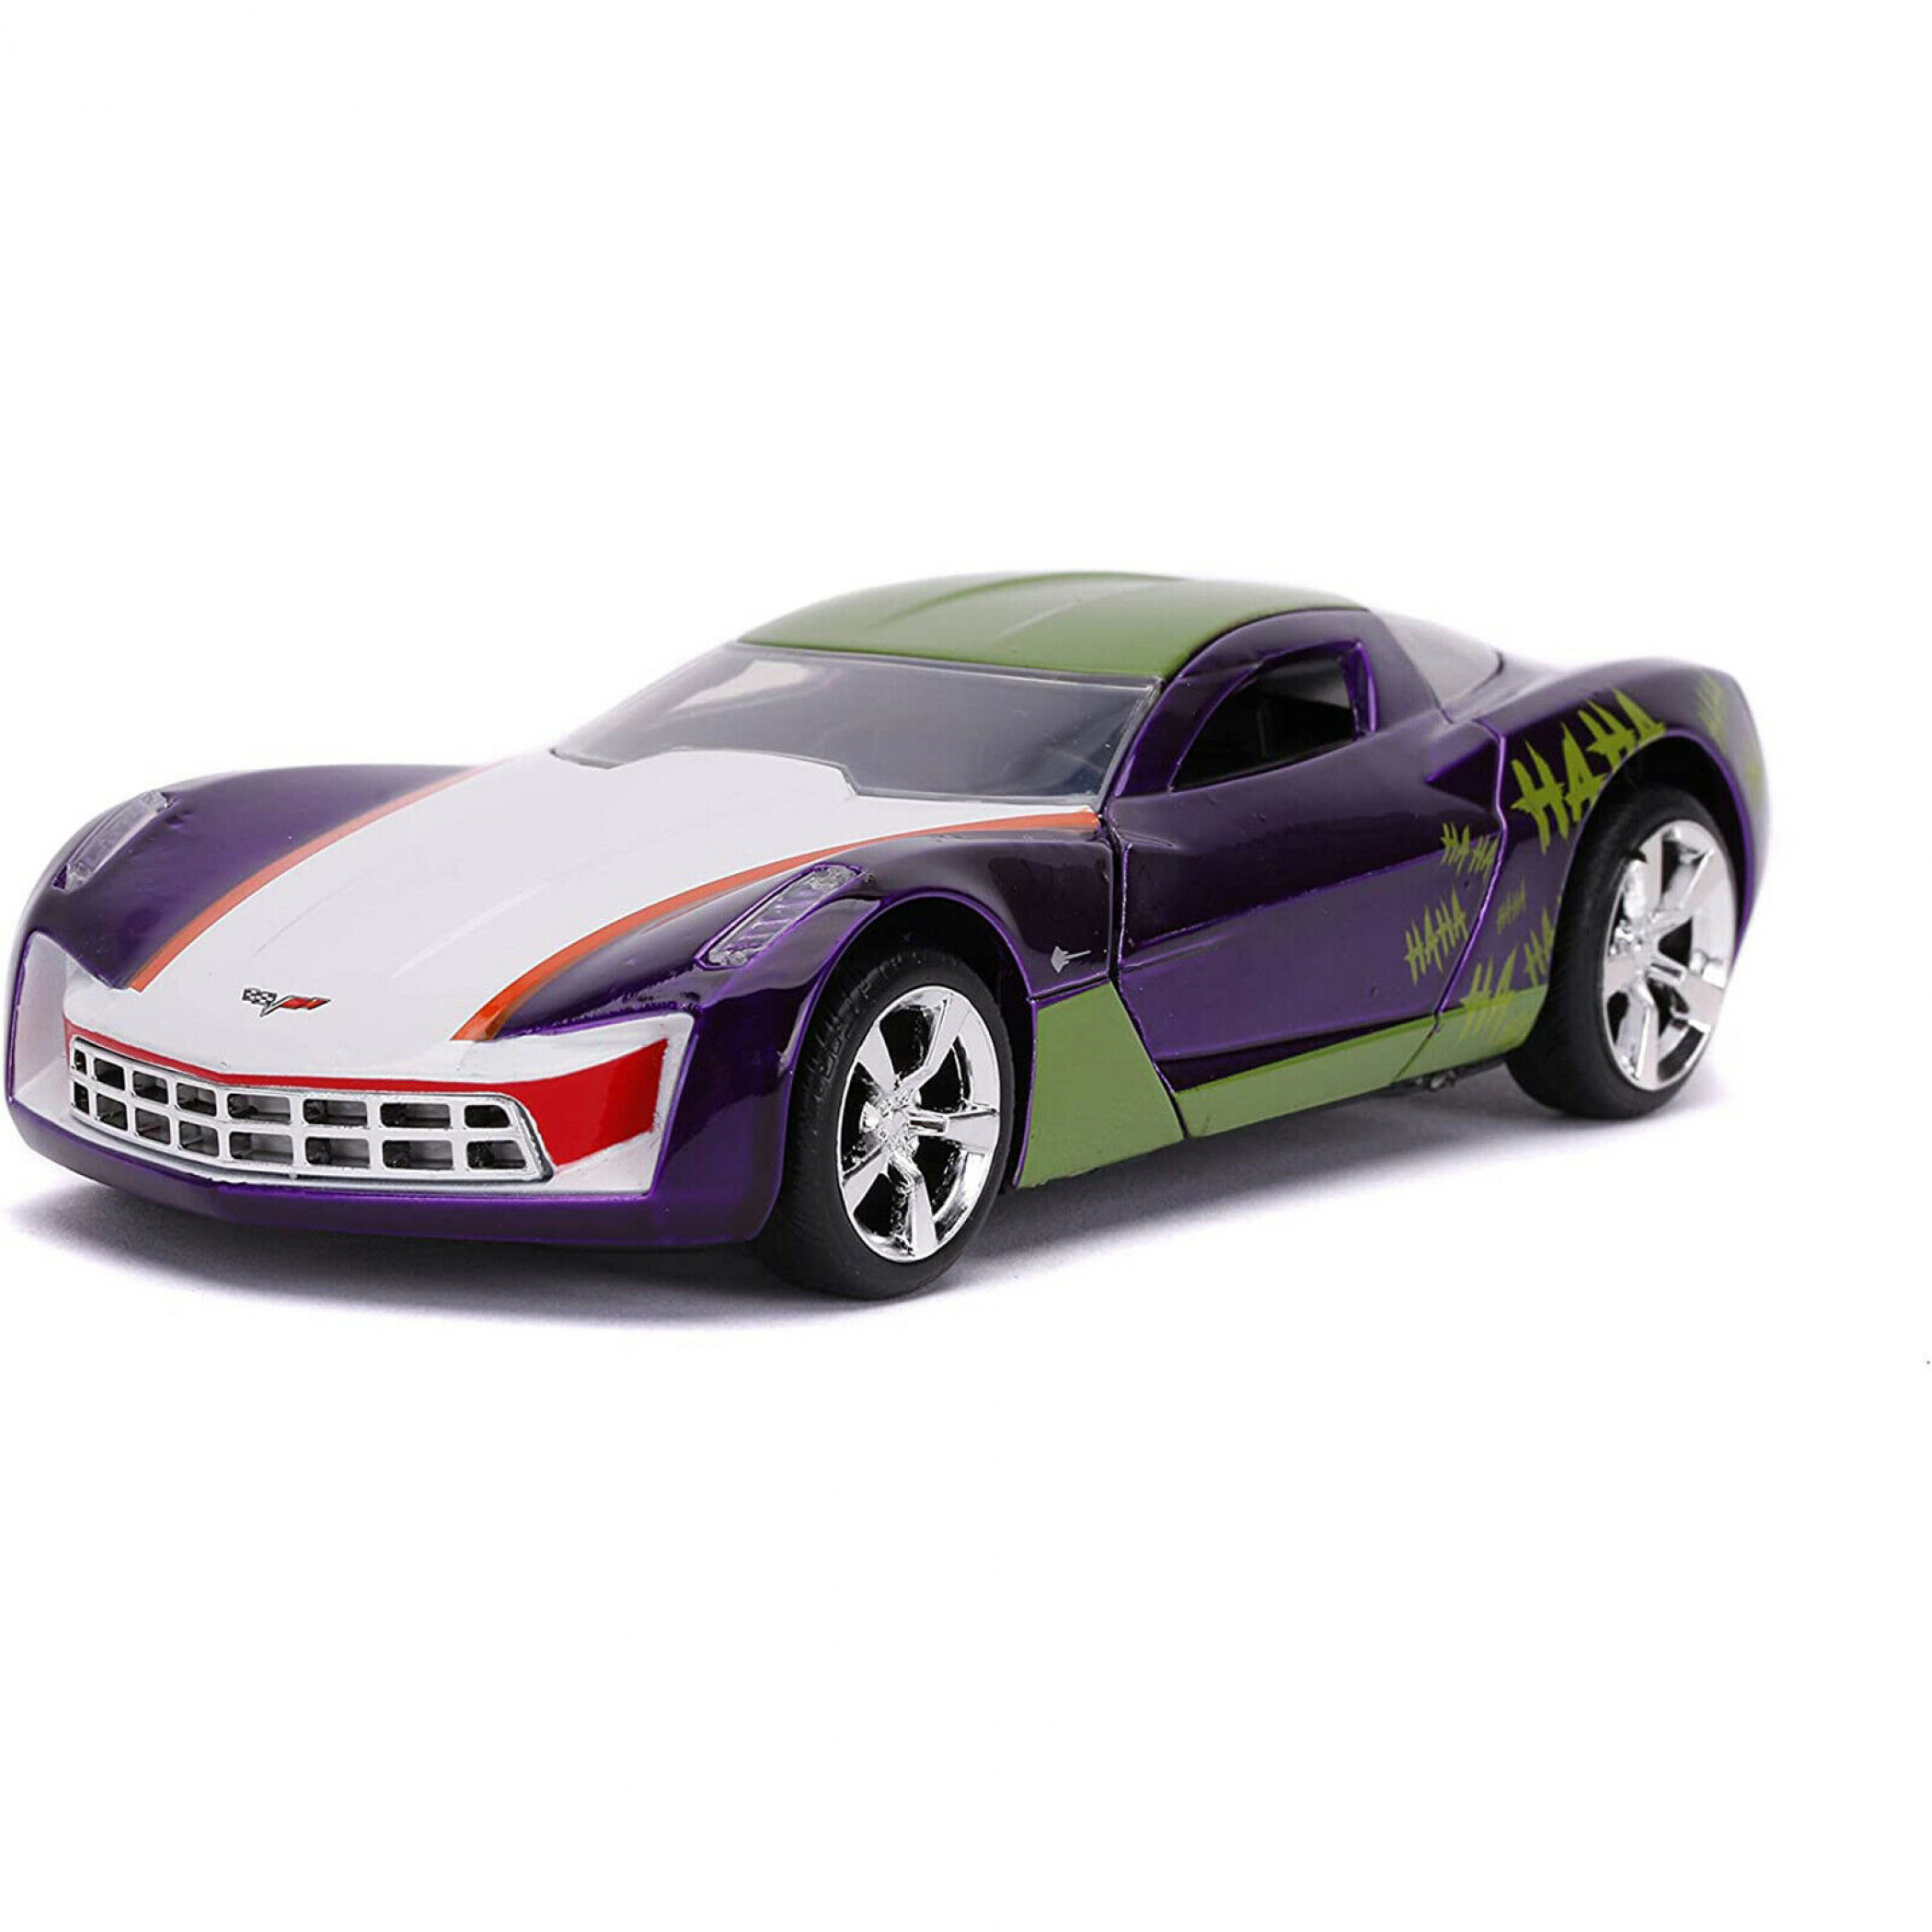 Joker Chevy Corvette Stingray 5" Metals Die Cast 1:32 Movie Car by Jada Toys